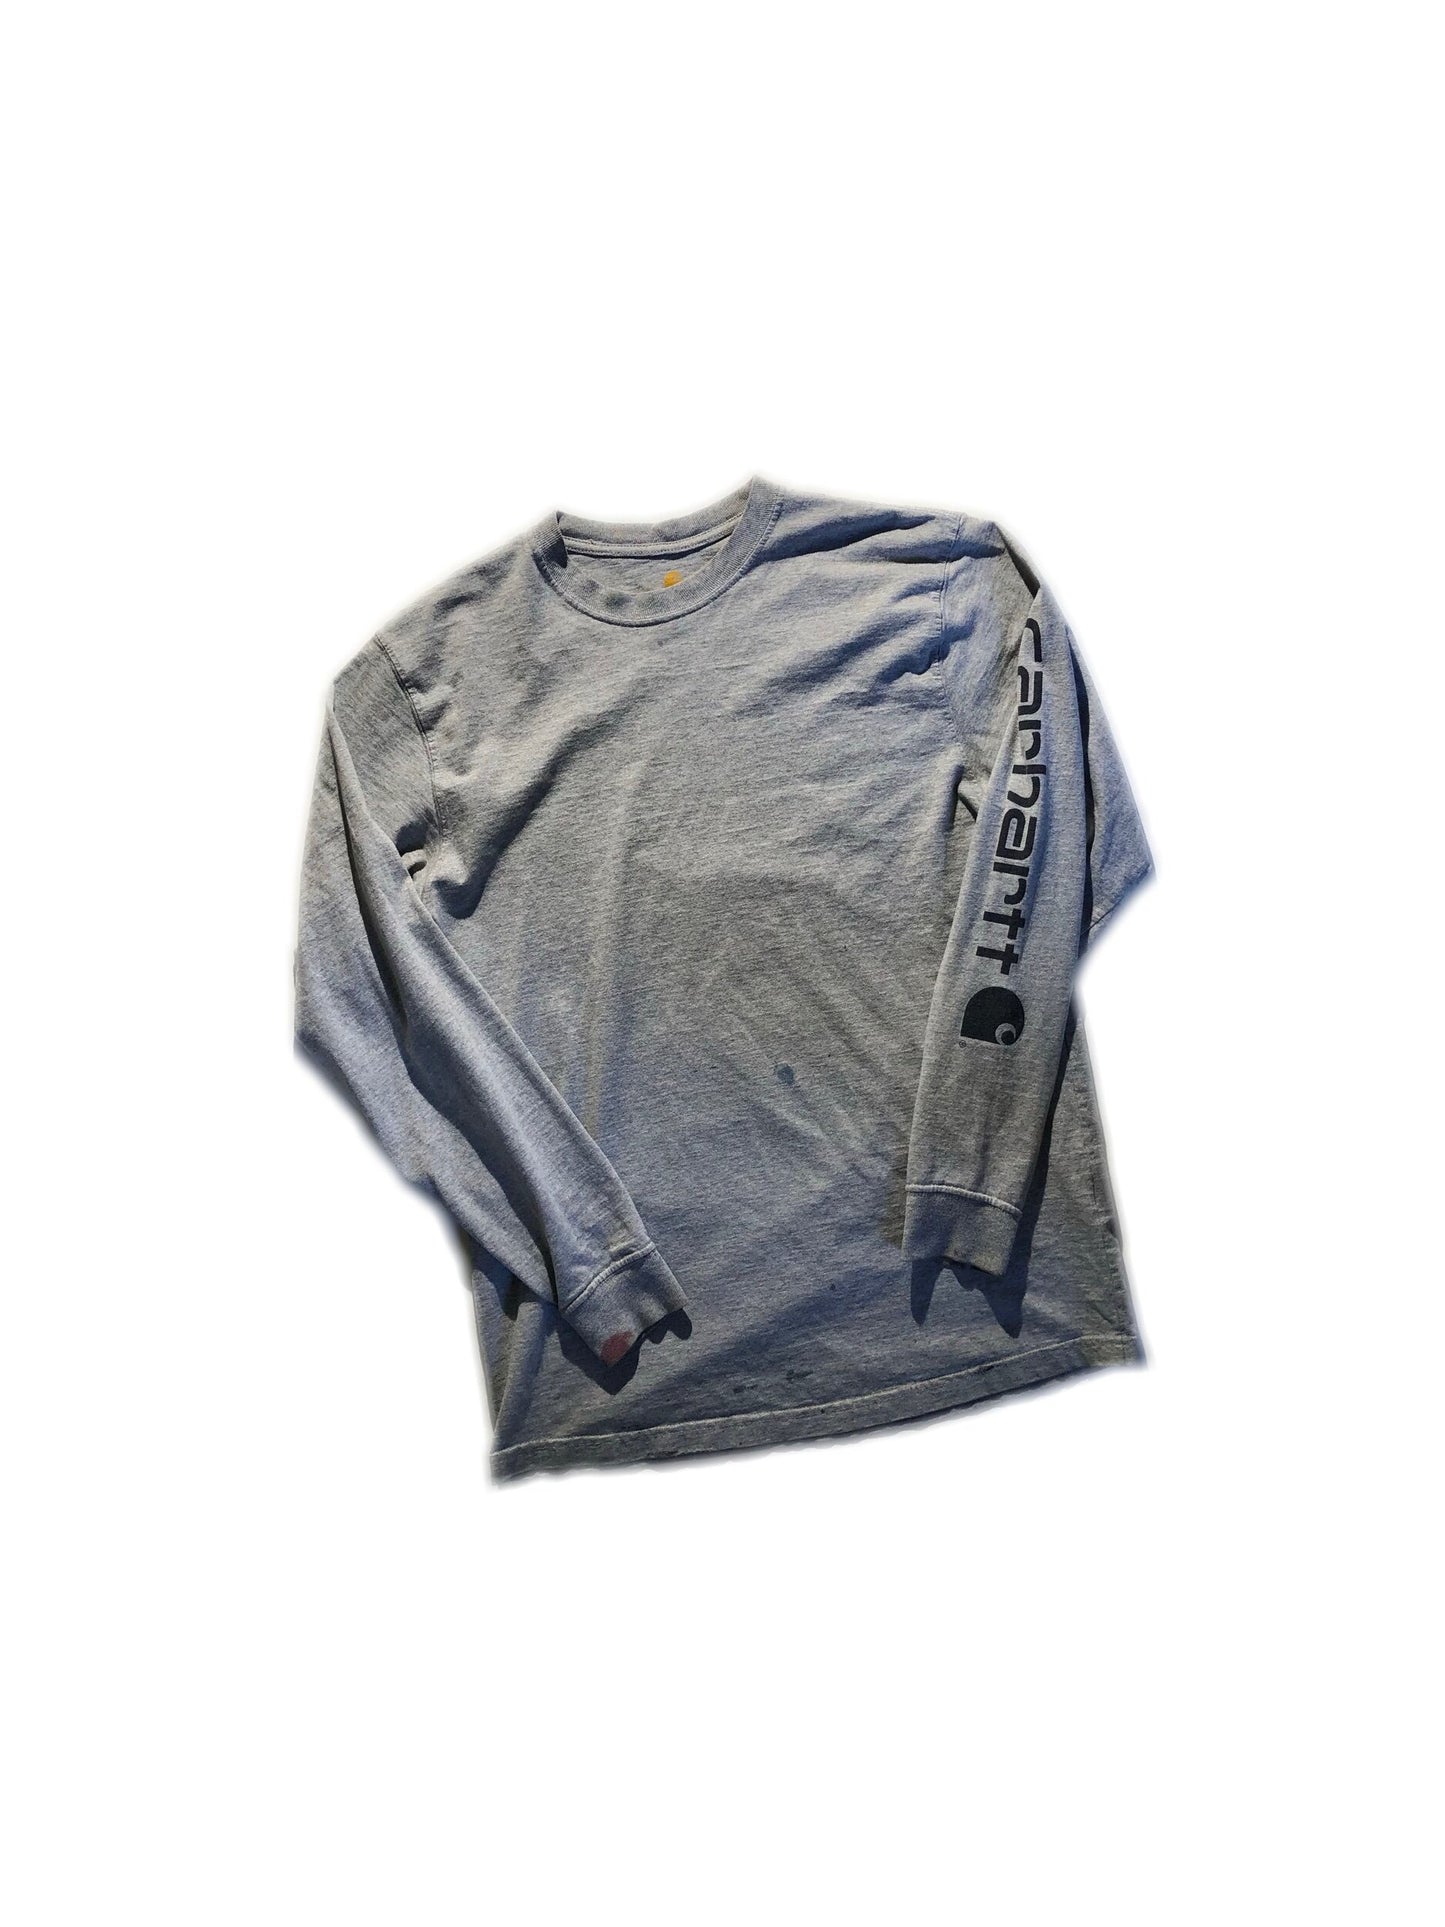 Vintage Carhartt Long Sleeve Shirt 🎨